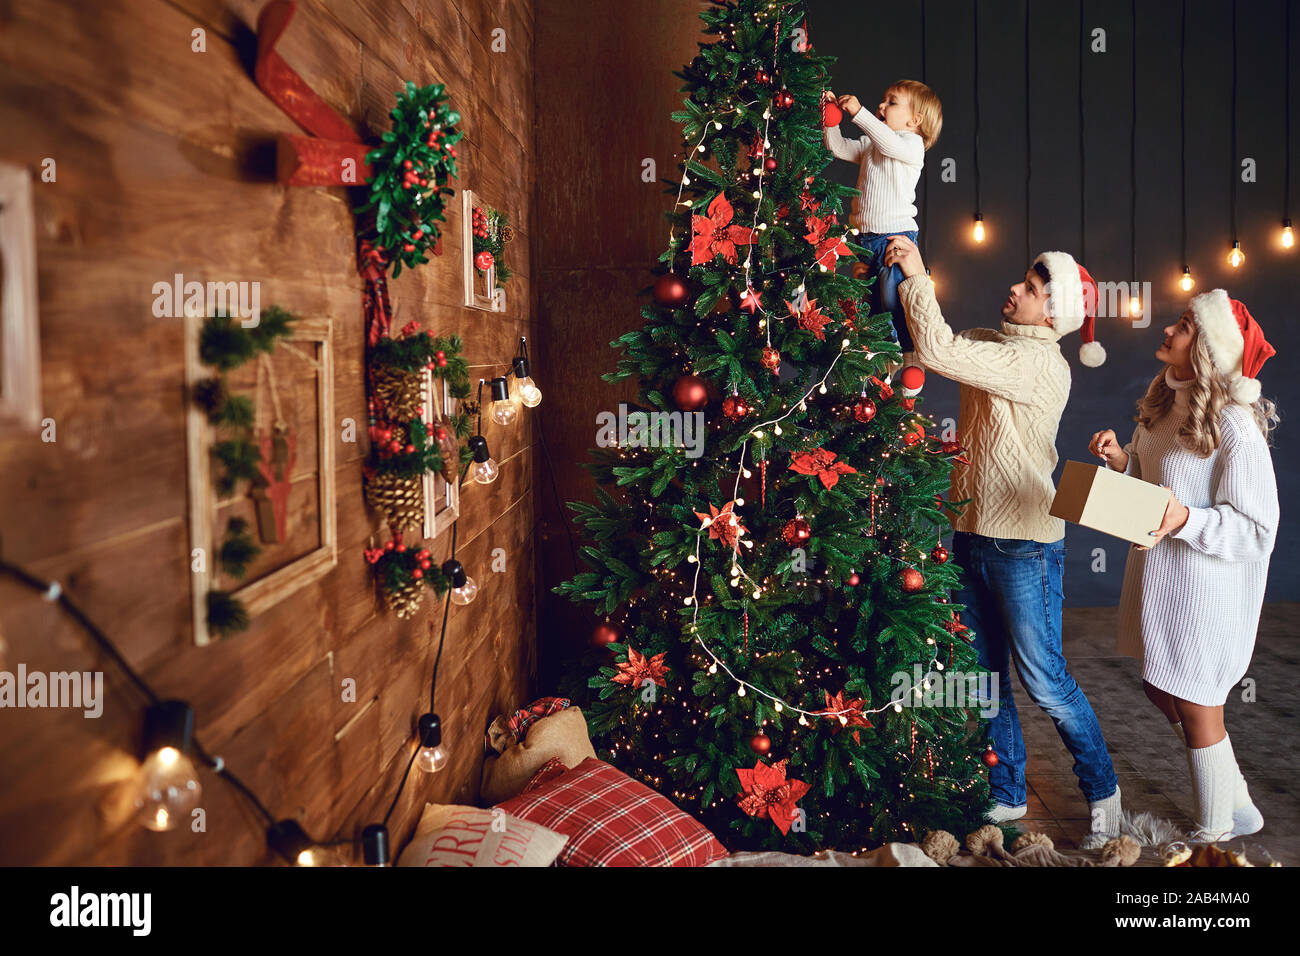 Loving family decorating Christmas tree together Stock Photo